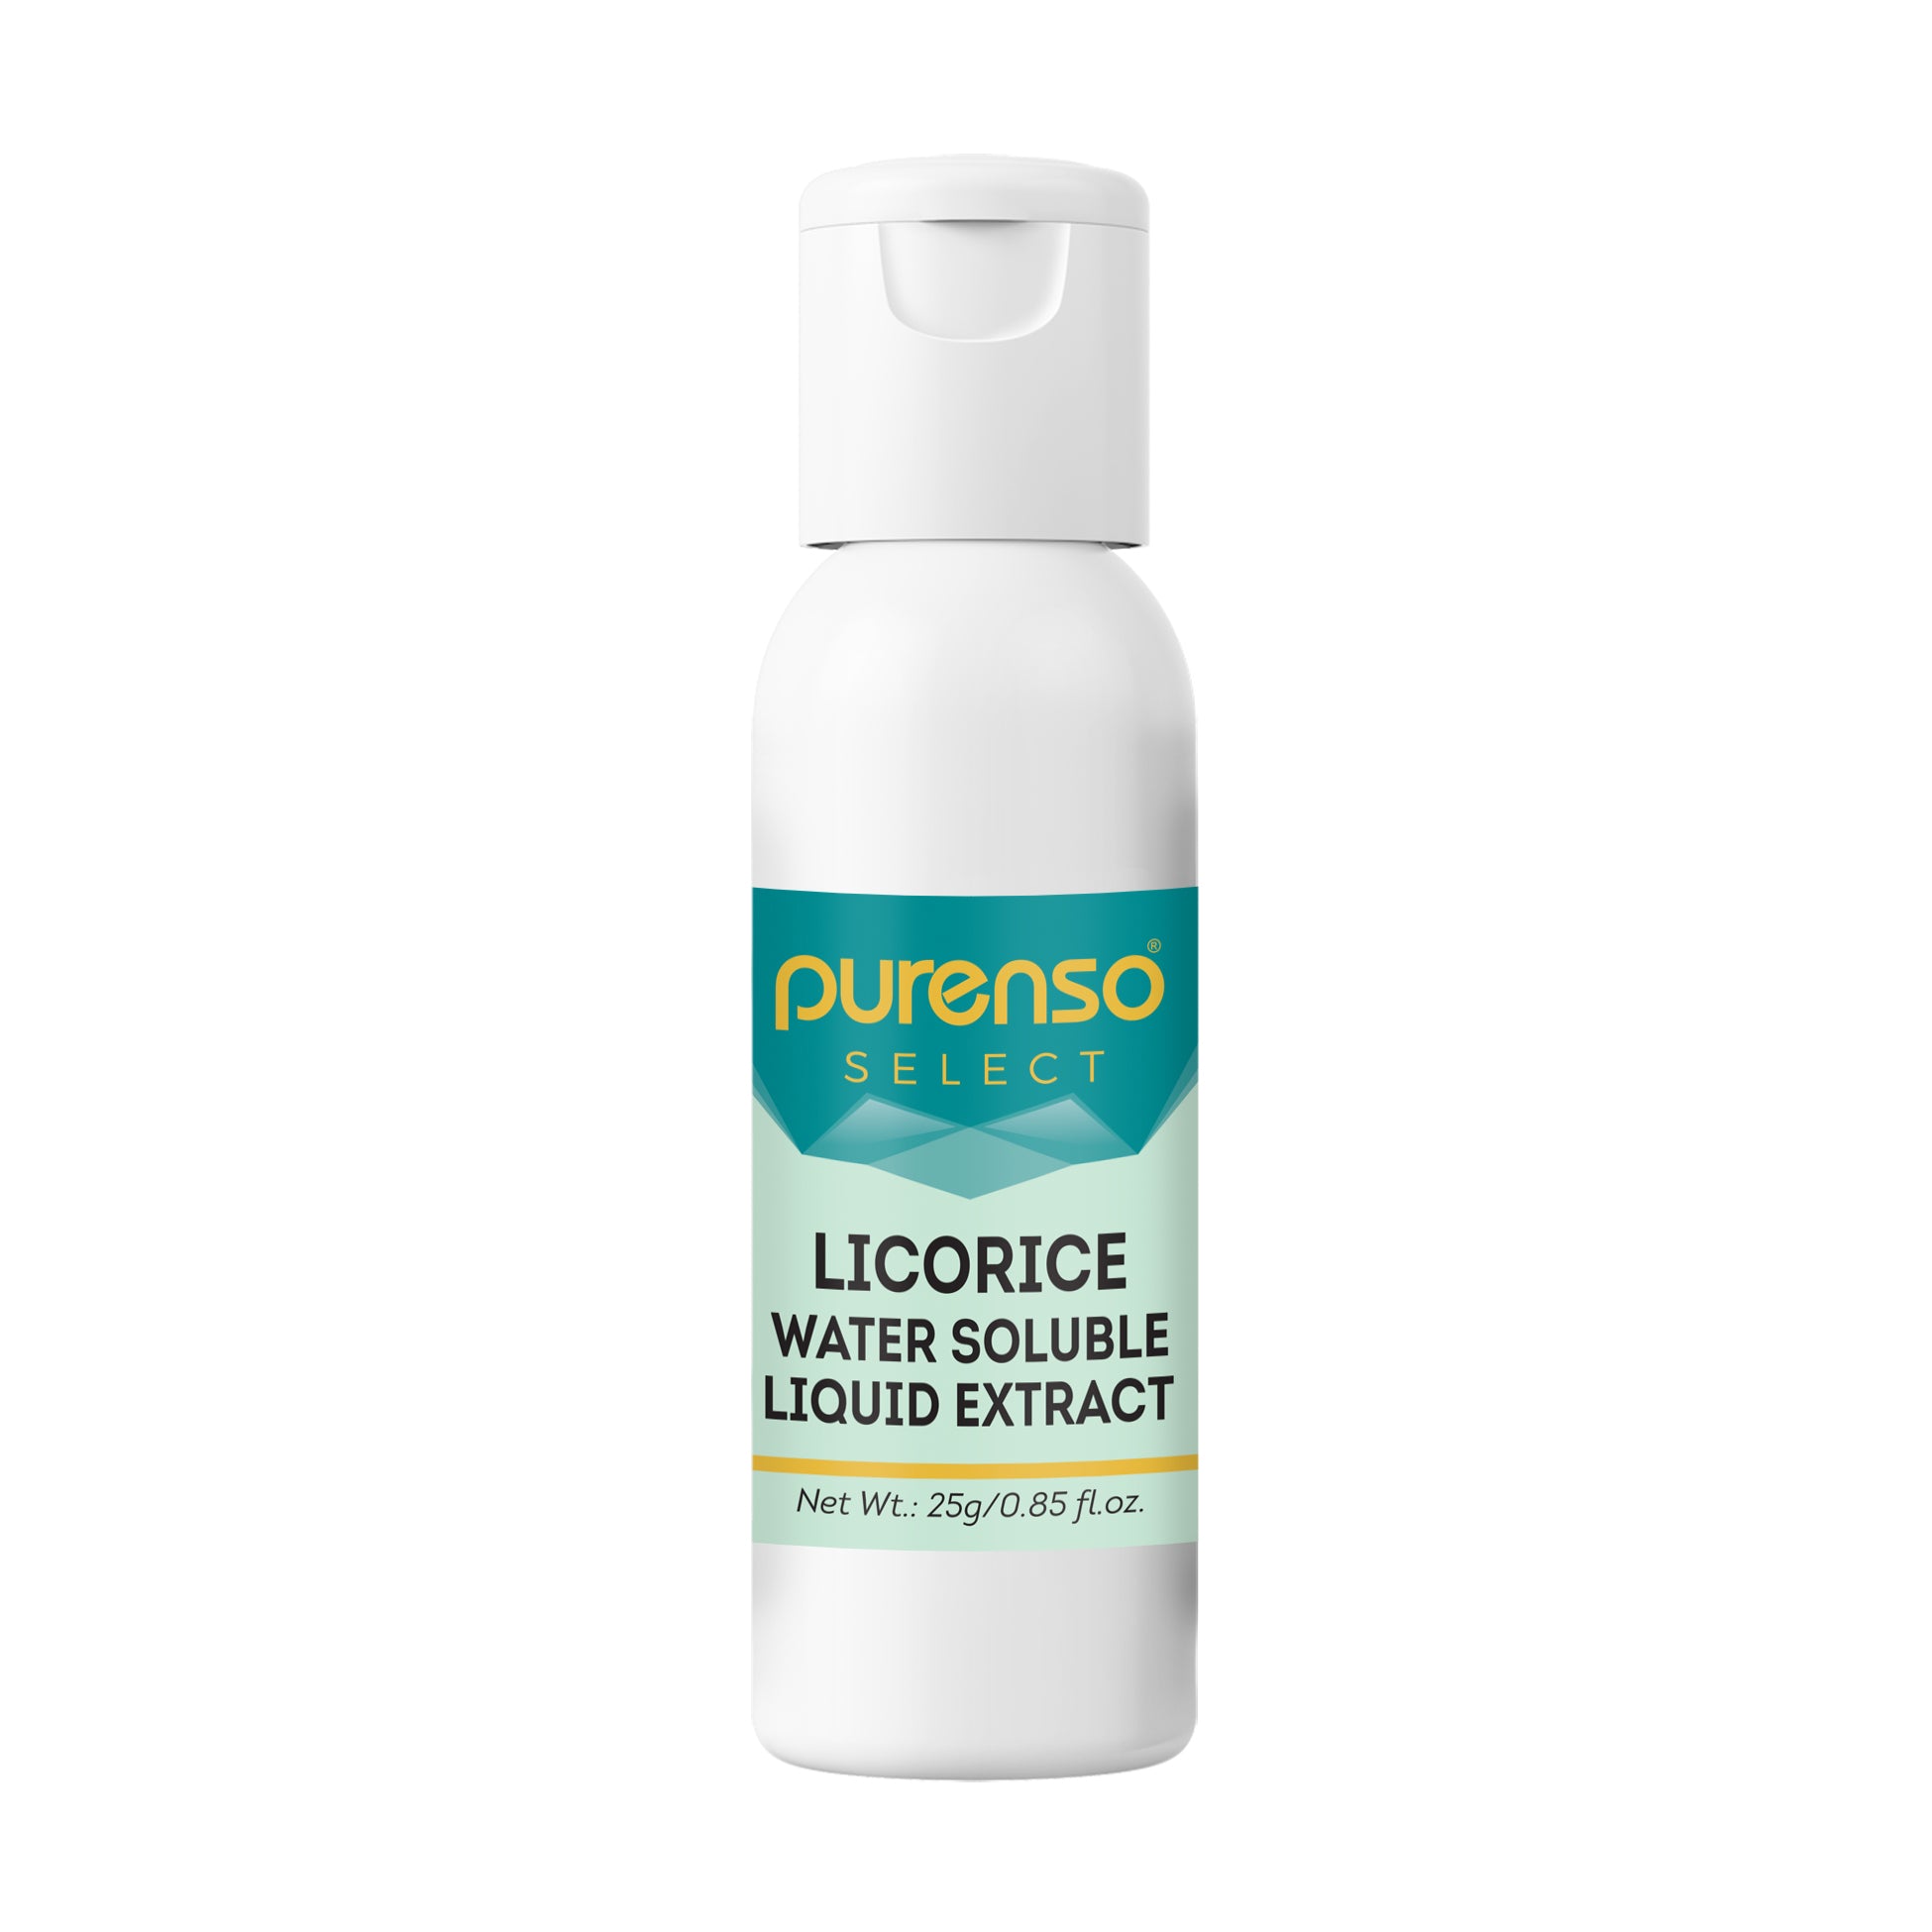 Licorice Liquid Extract - Water Soluble